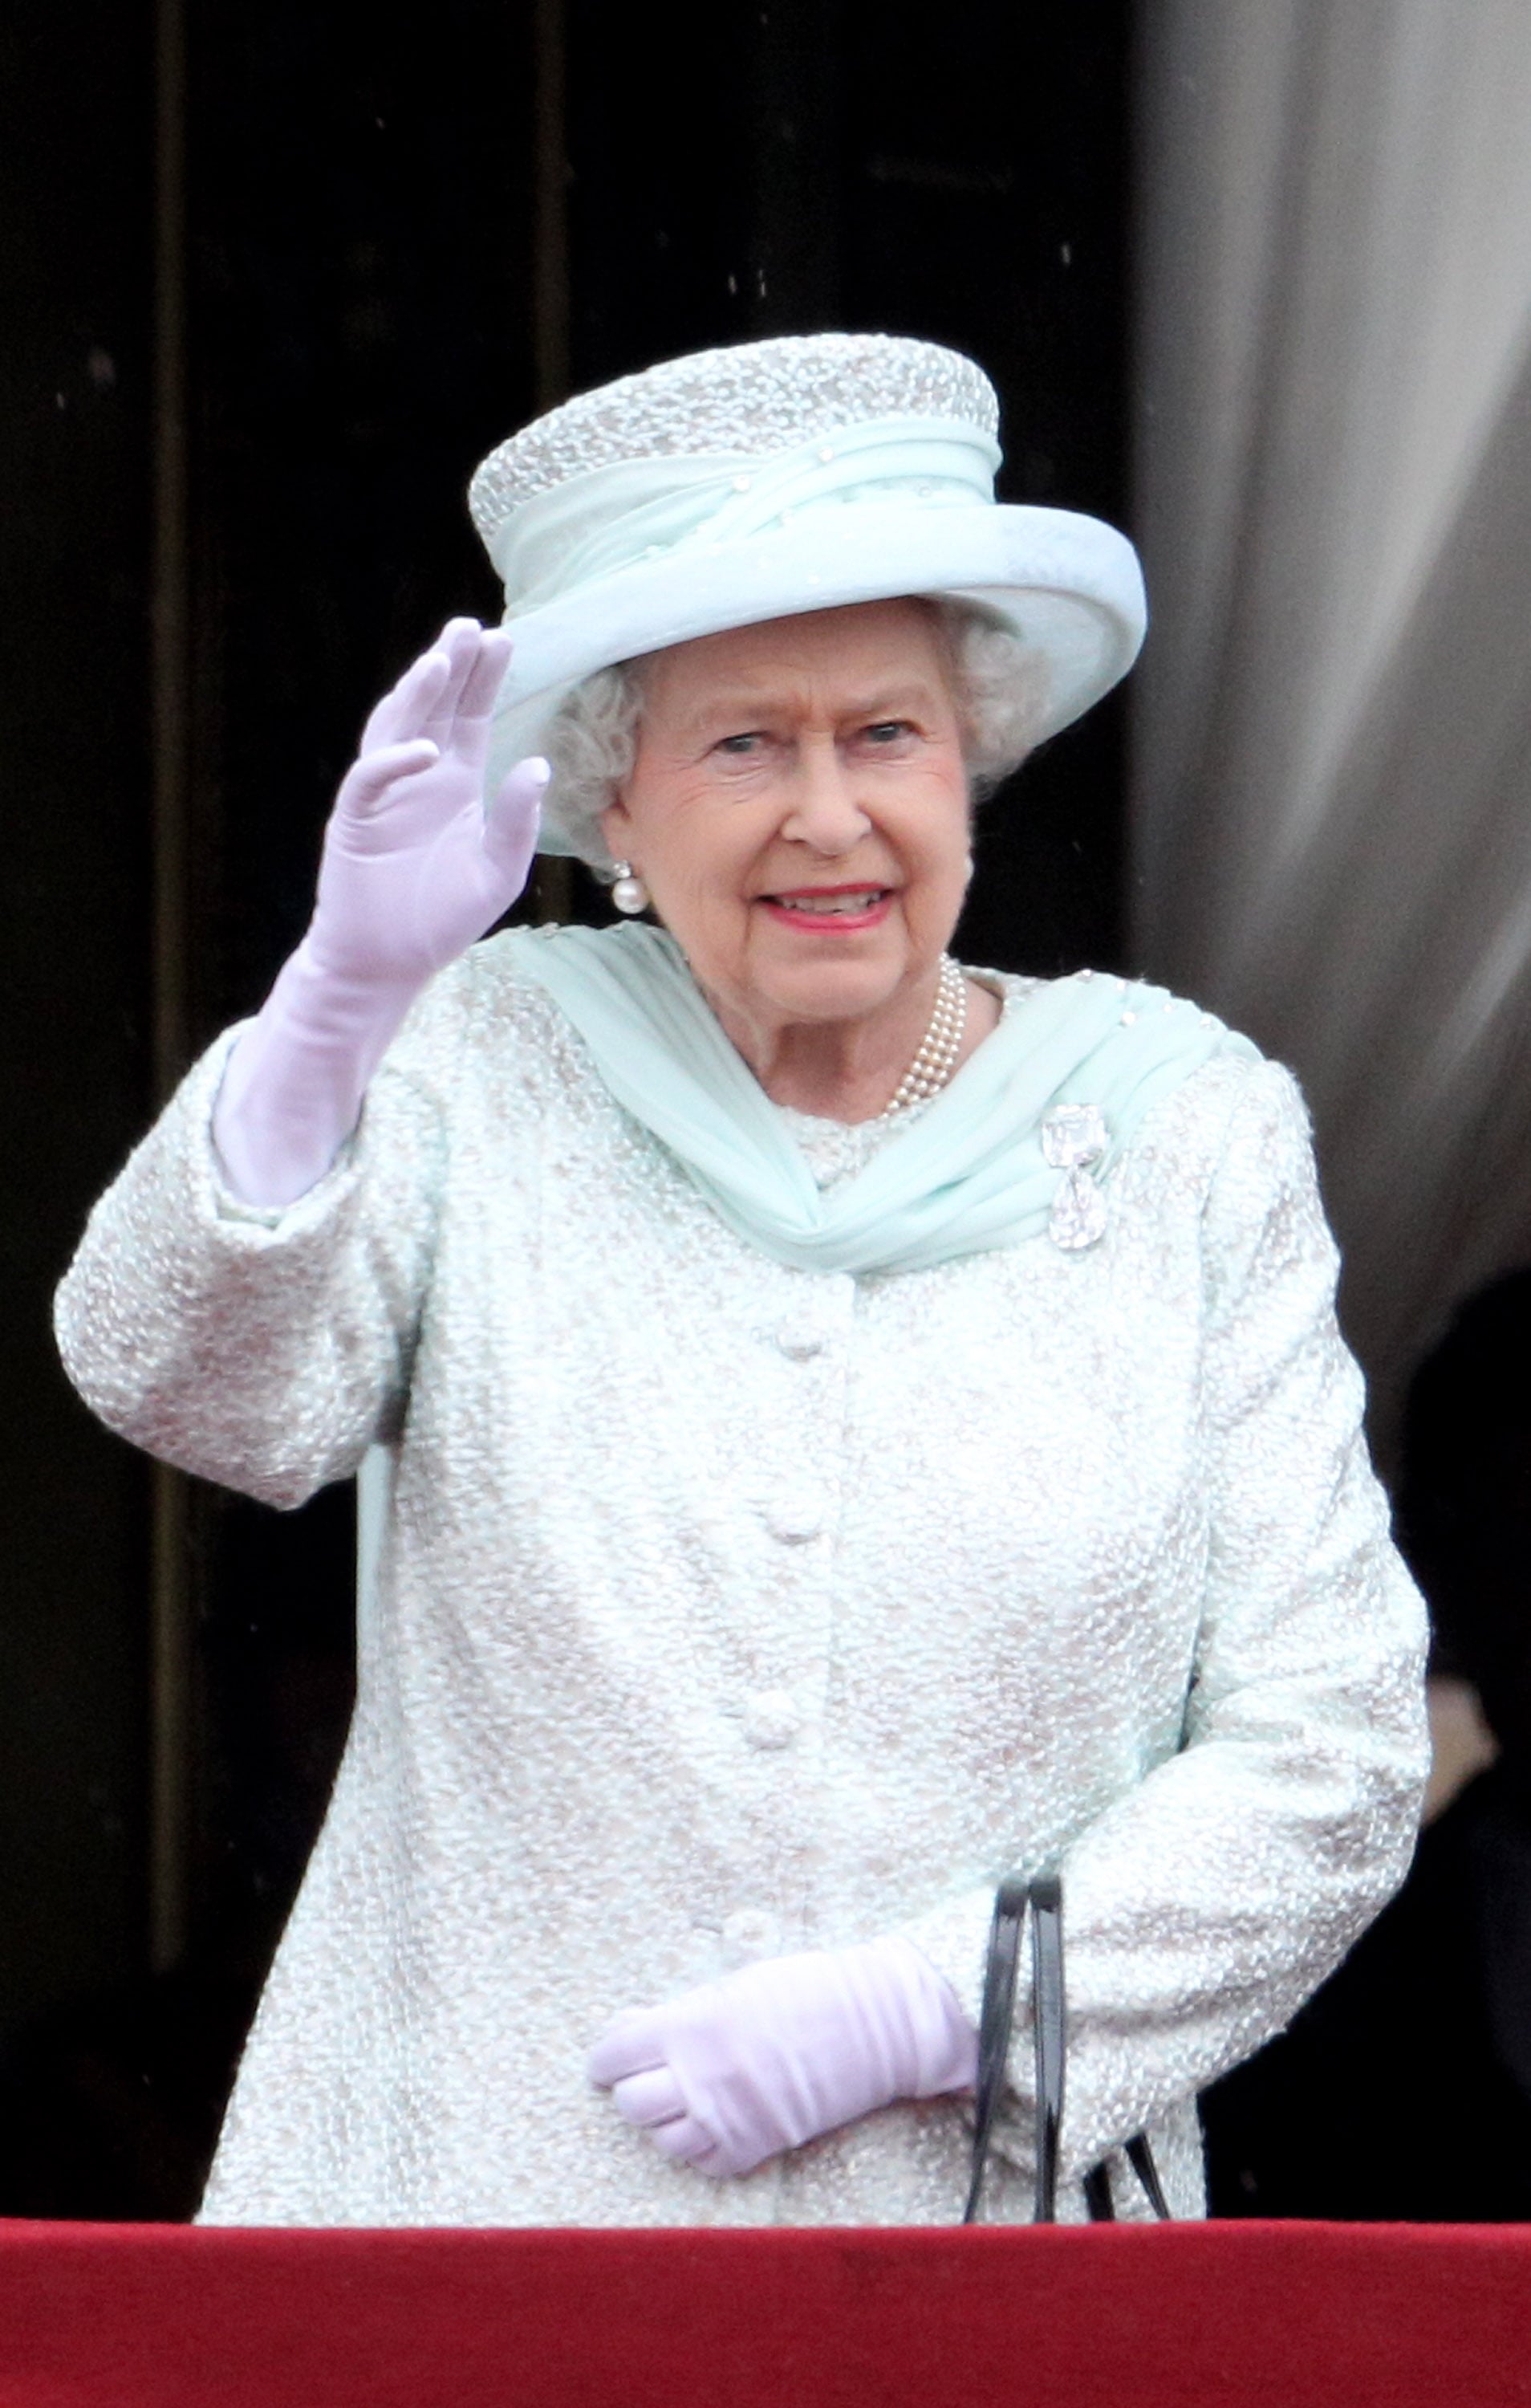 Queen Elizabeth II waves to the crowds at her Diamond Jubilee in 2012